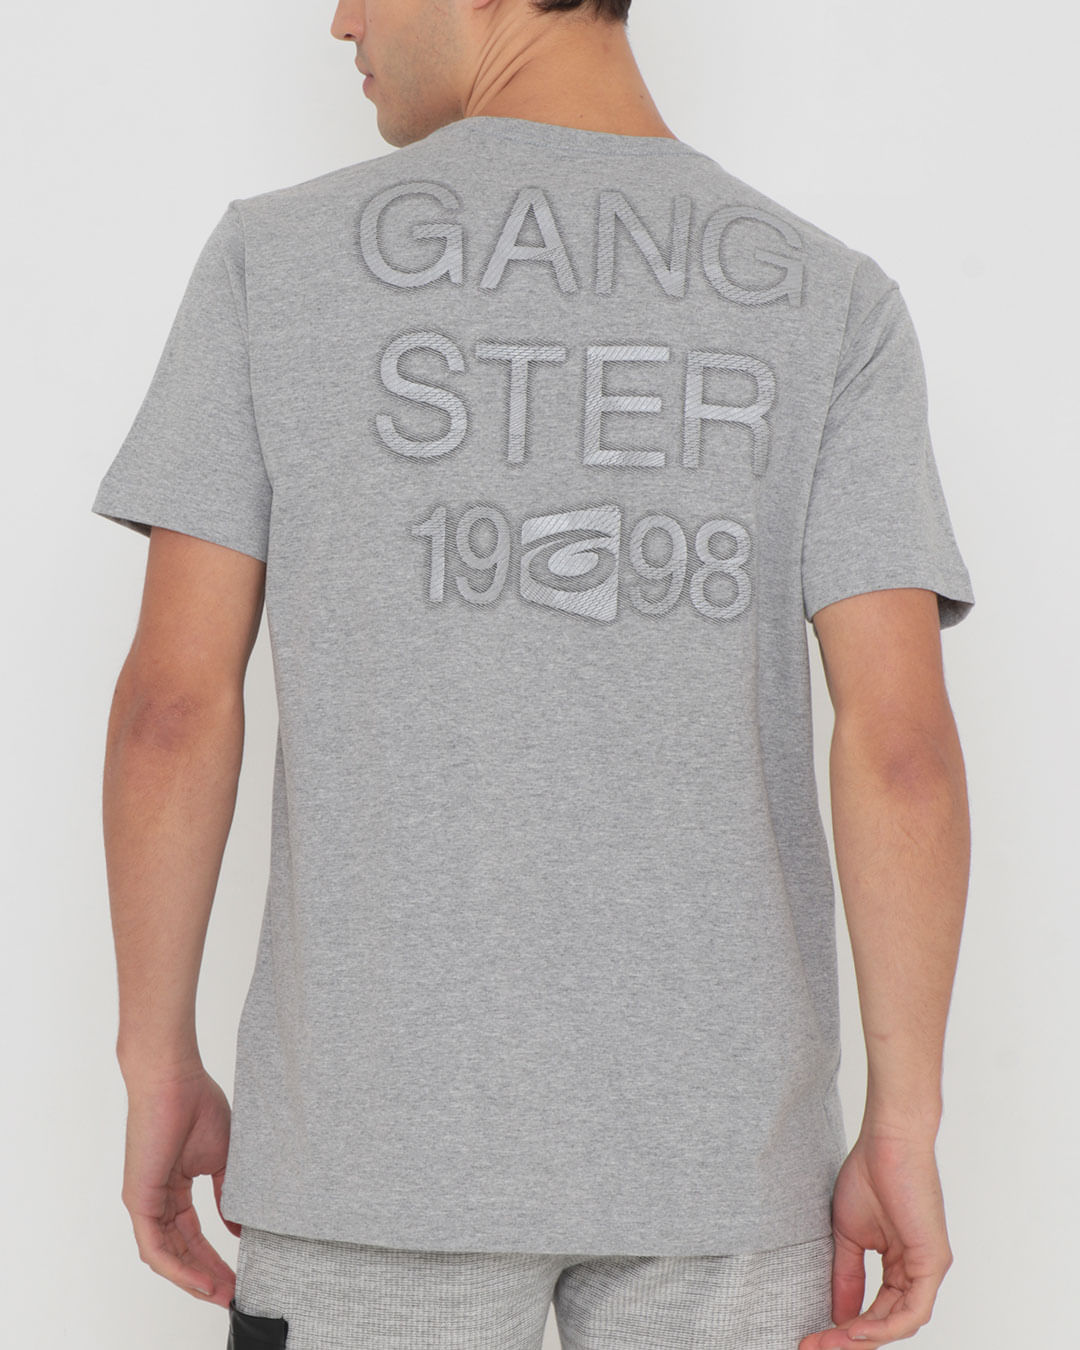 Camiseta-Manga-Curta-Estampa-Gangster-Mescla-Cinza